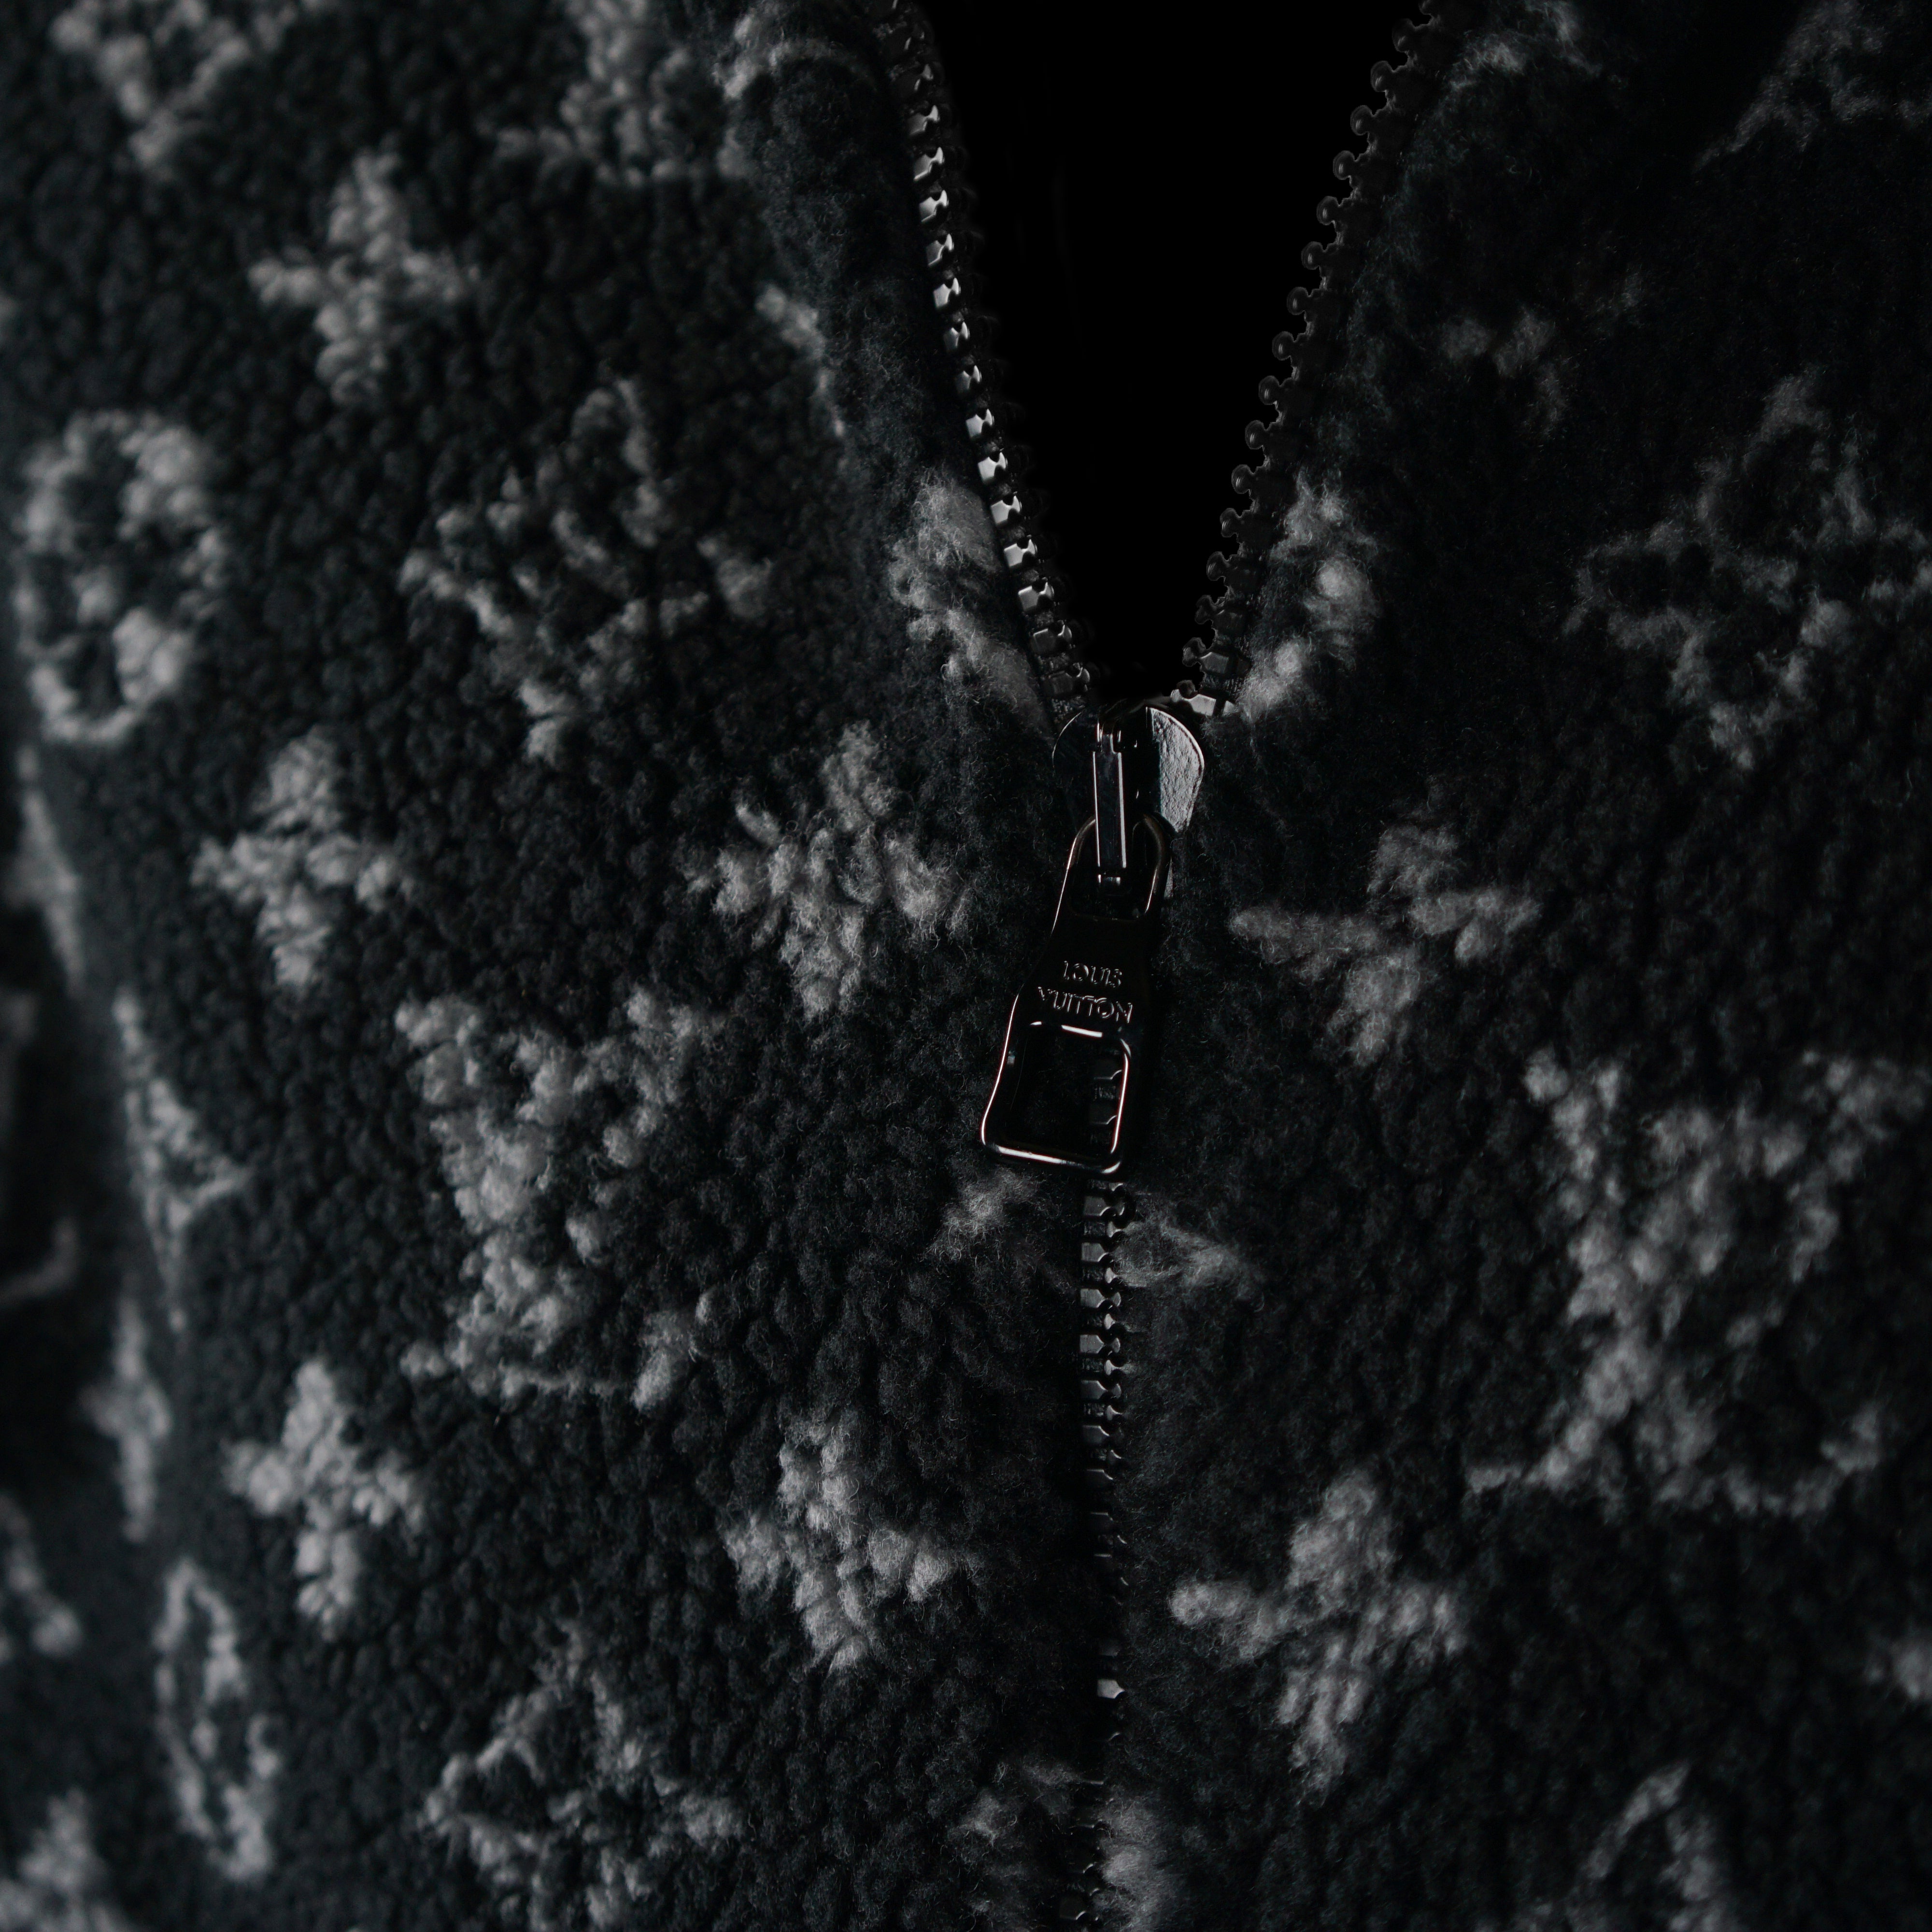 Louis Vuitton  Black 3L Mens Monogram Jacquard Fleece Zip Through